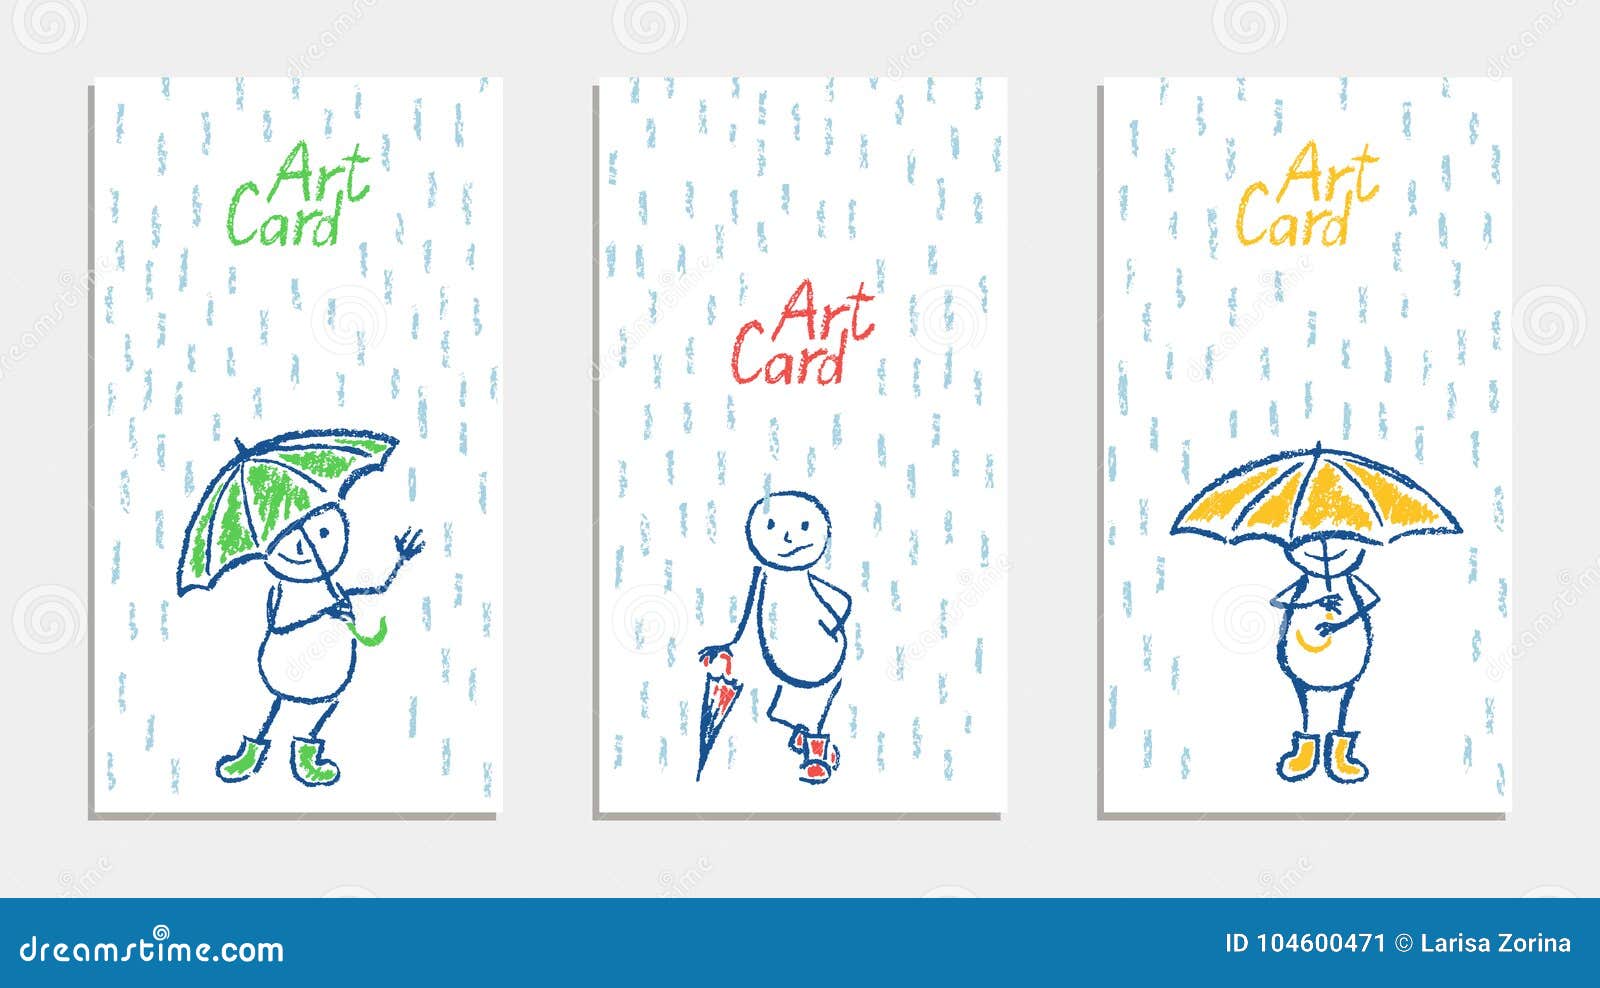 Карандашек или карандашик как. Карточка дождь. Картинки логопеда для детей дождик карточки. Из карточки дождь висит. Raindrops Card.